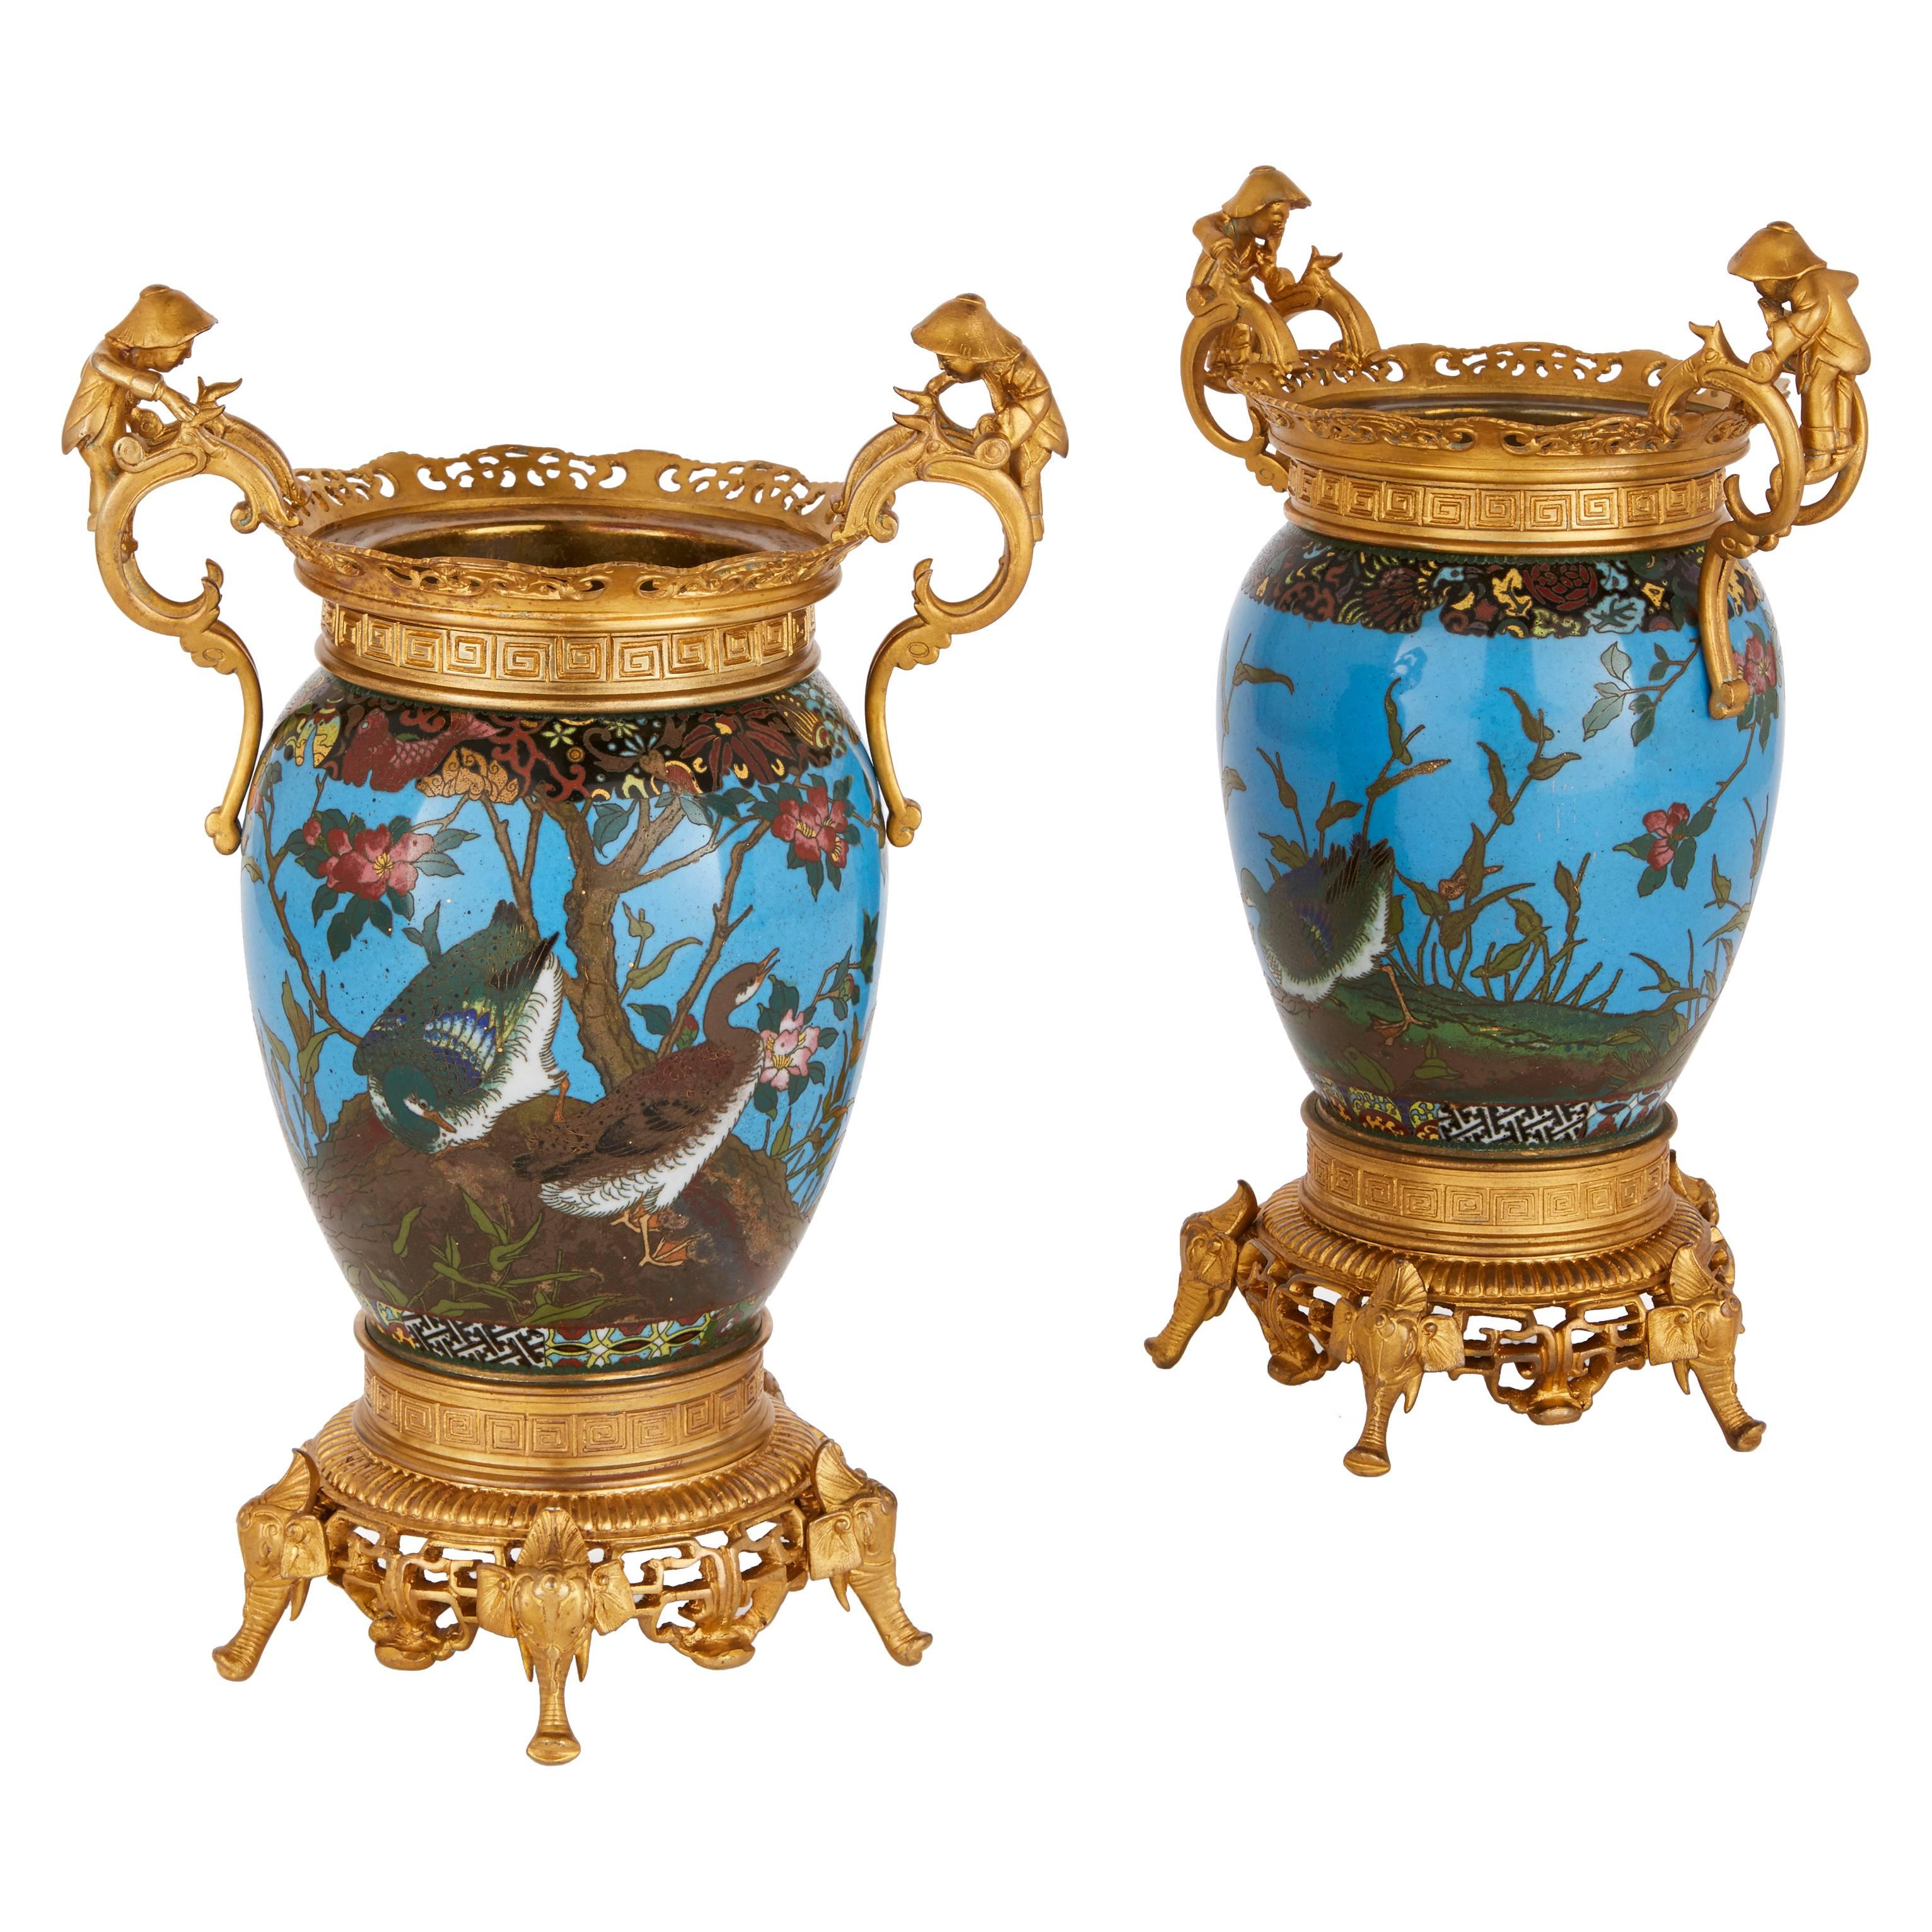 Pair of Ormolu-Mounted Cloisonné Enamel Vases